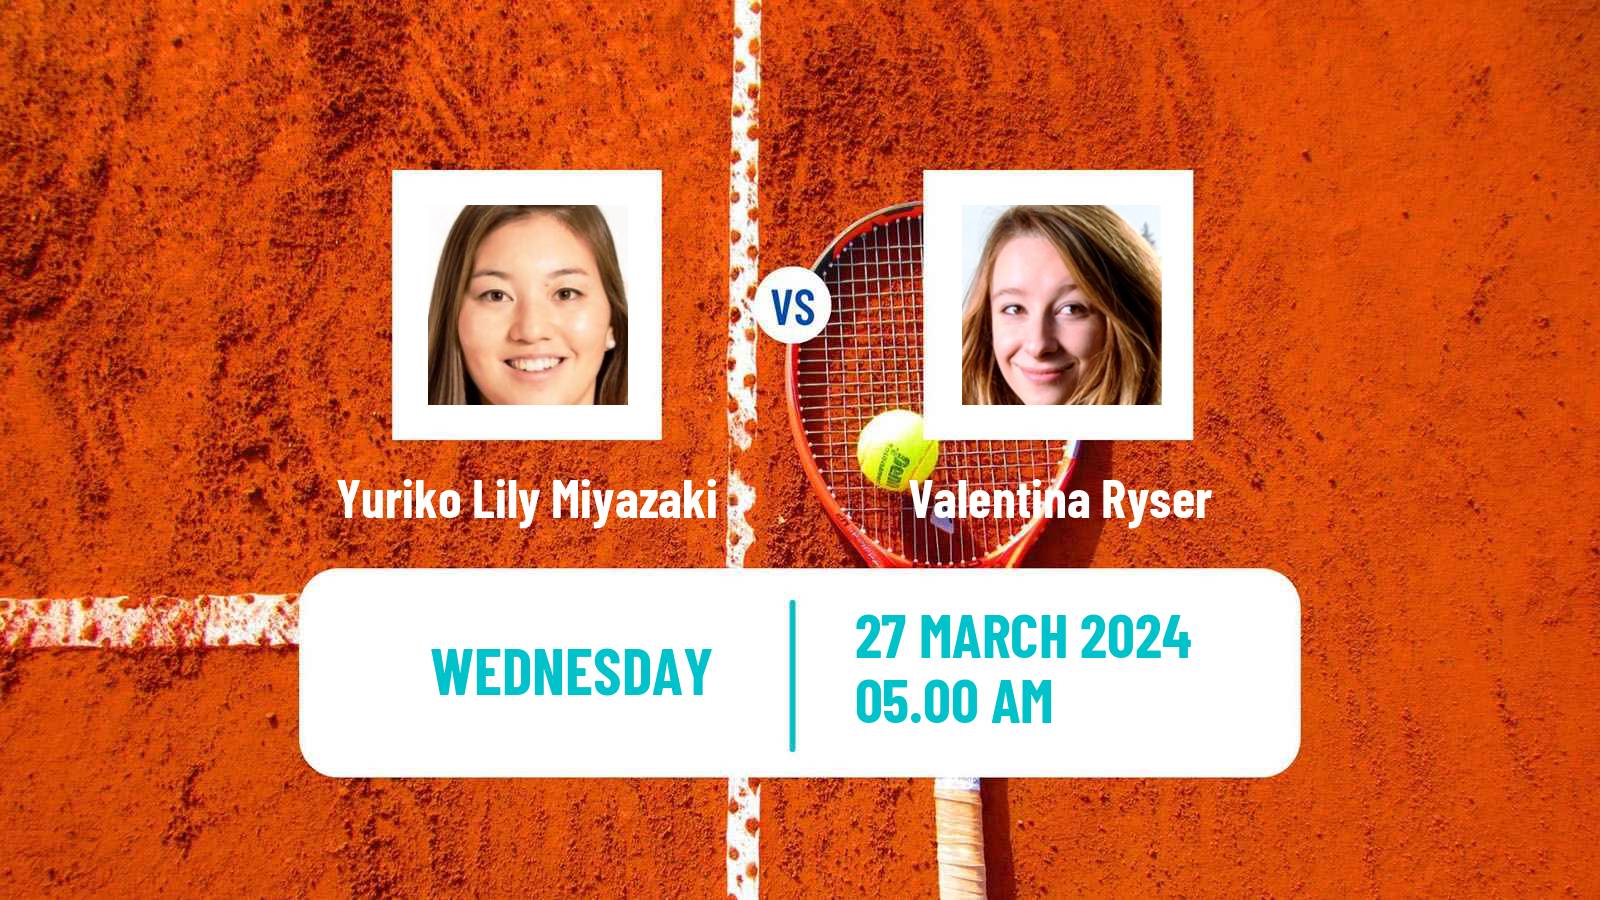 Tennis ITF W75 Croissy Beaubourg Women Yuriko Lily Miyazaki - Valentina Ryser